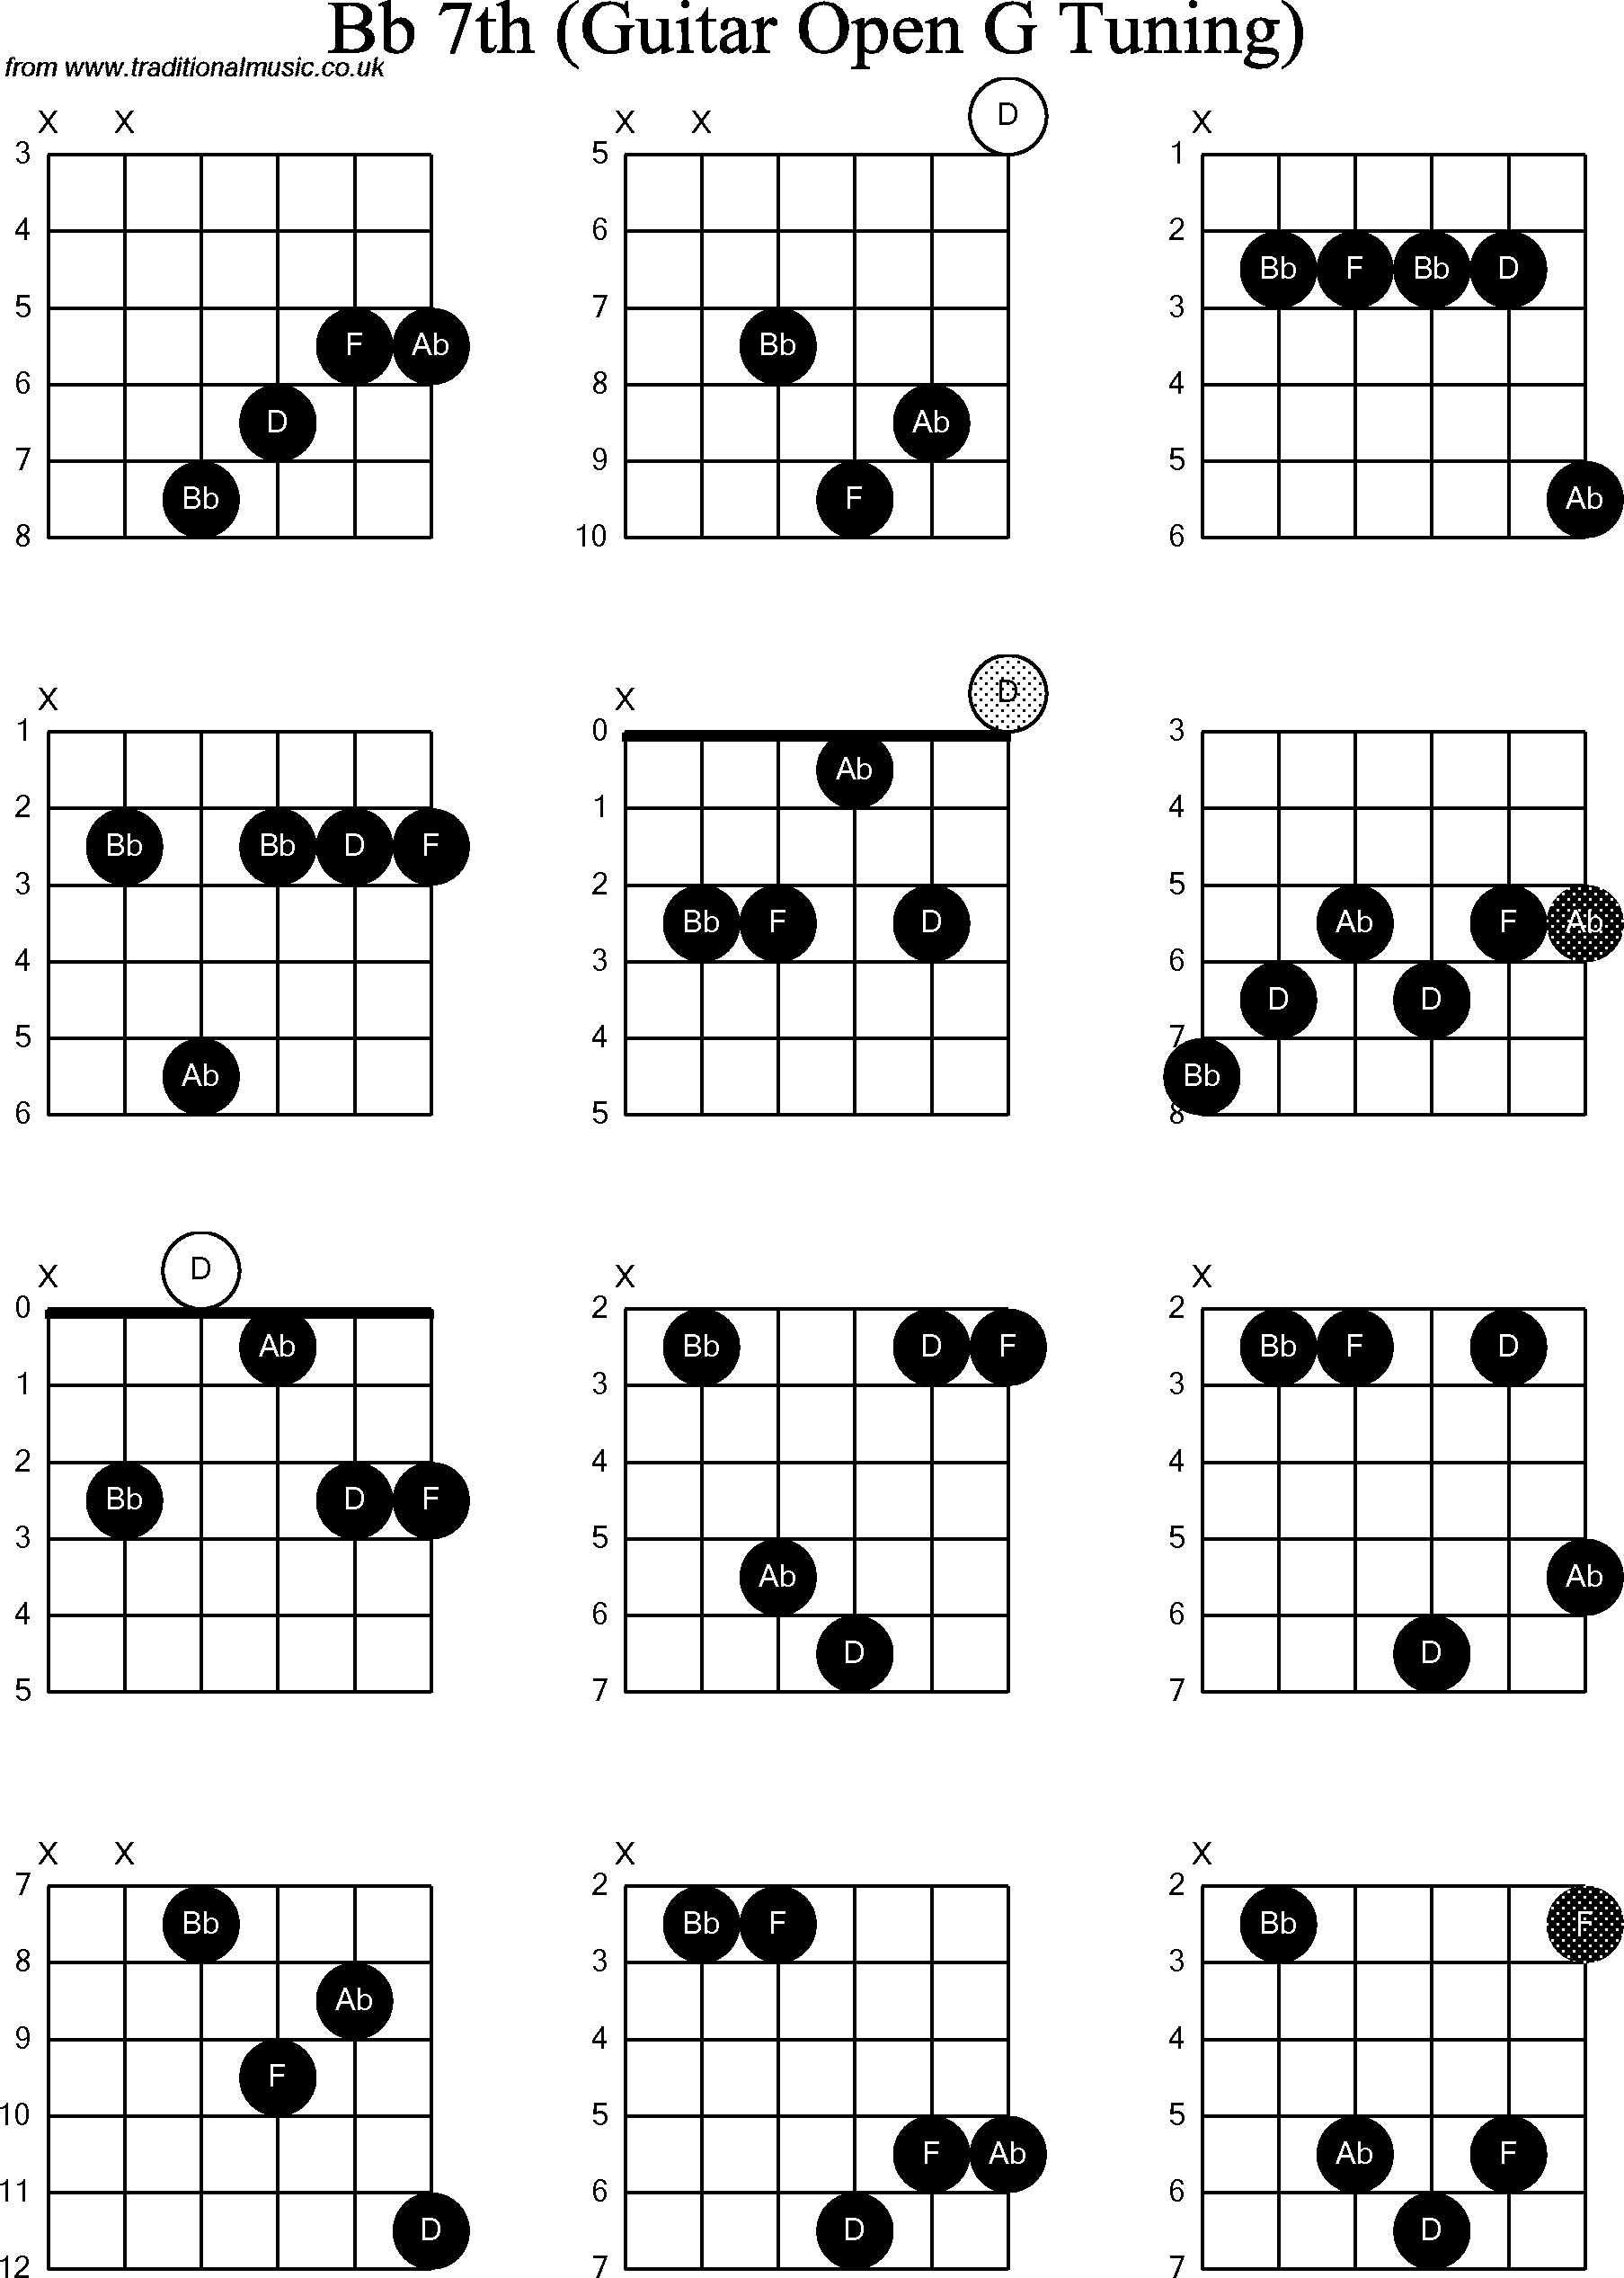 Chord diagrams for Dobro Bb7th